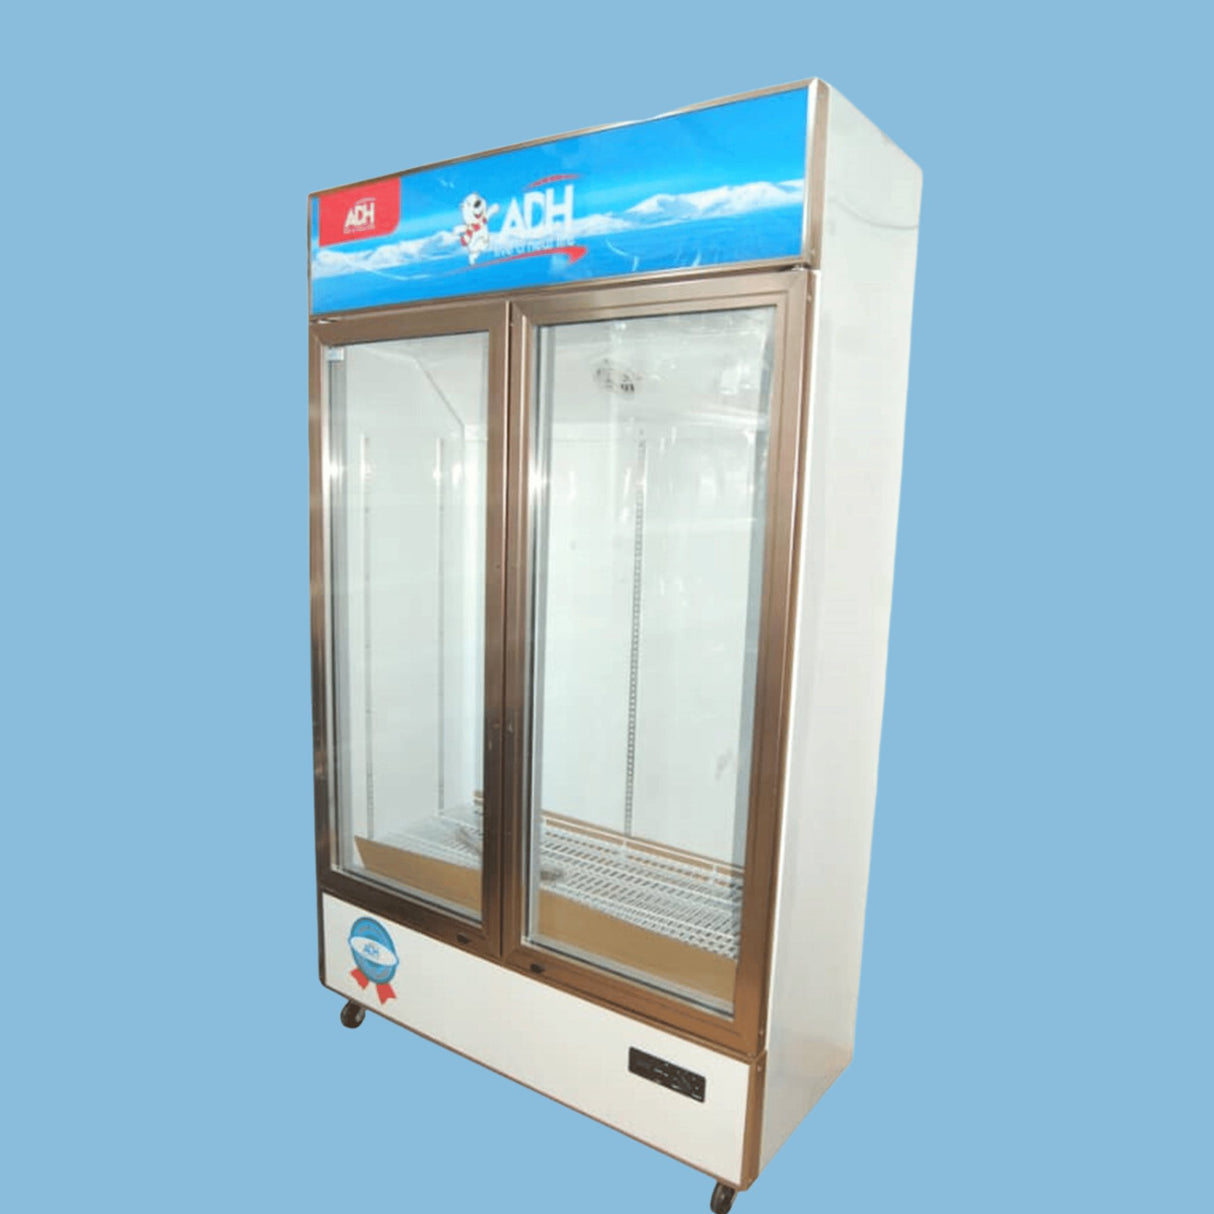 ADH 655Ltr Glass Double Door Display Refrigerator – White - KWT Tech Mart